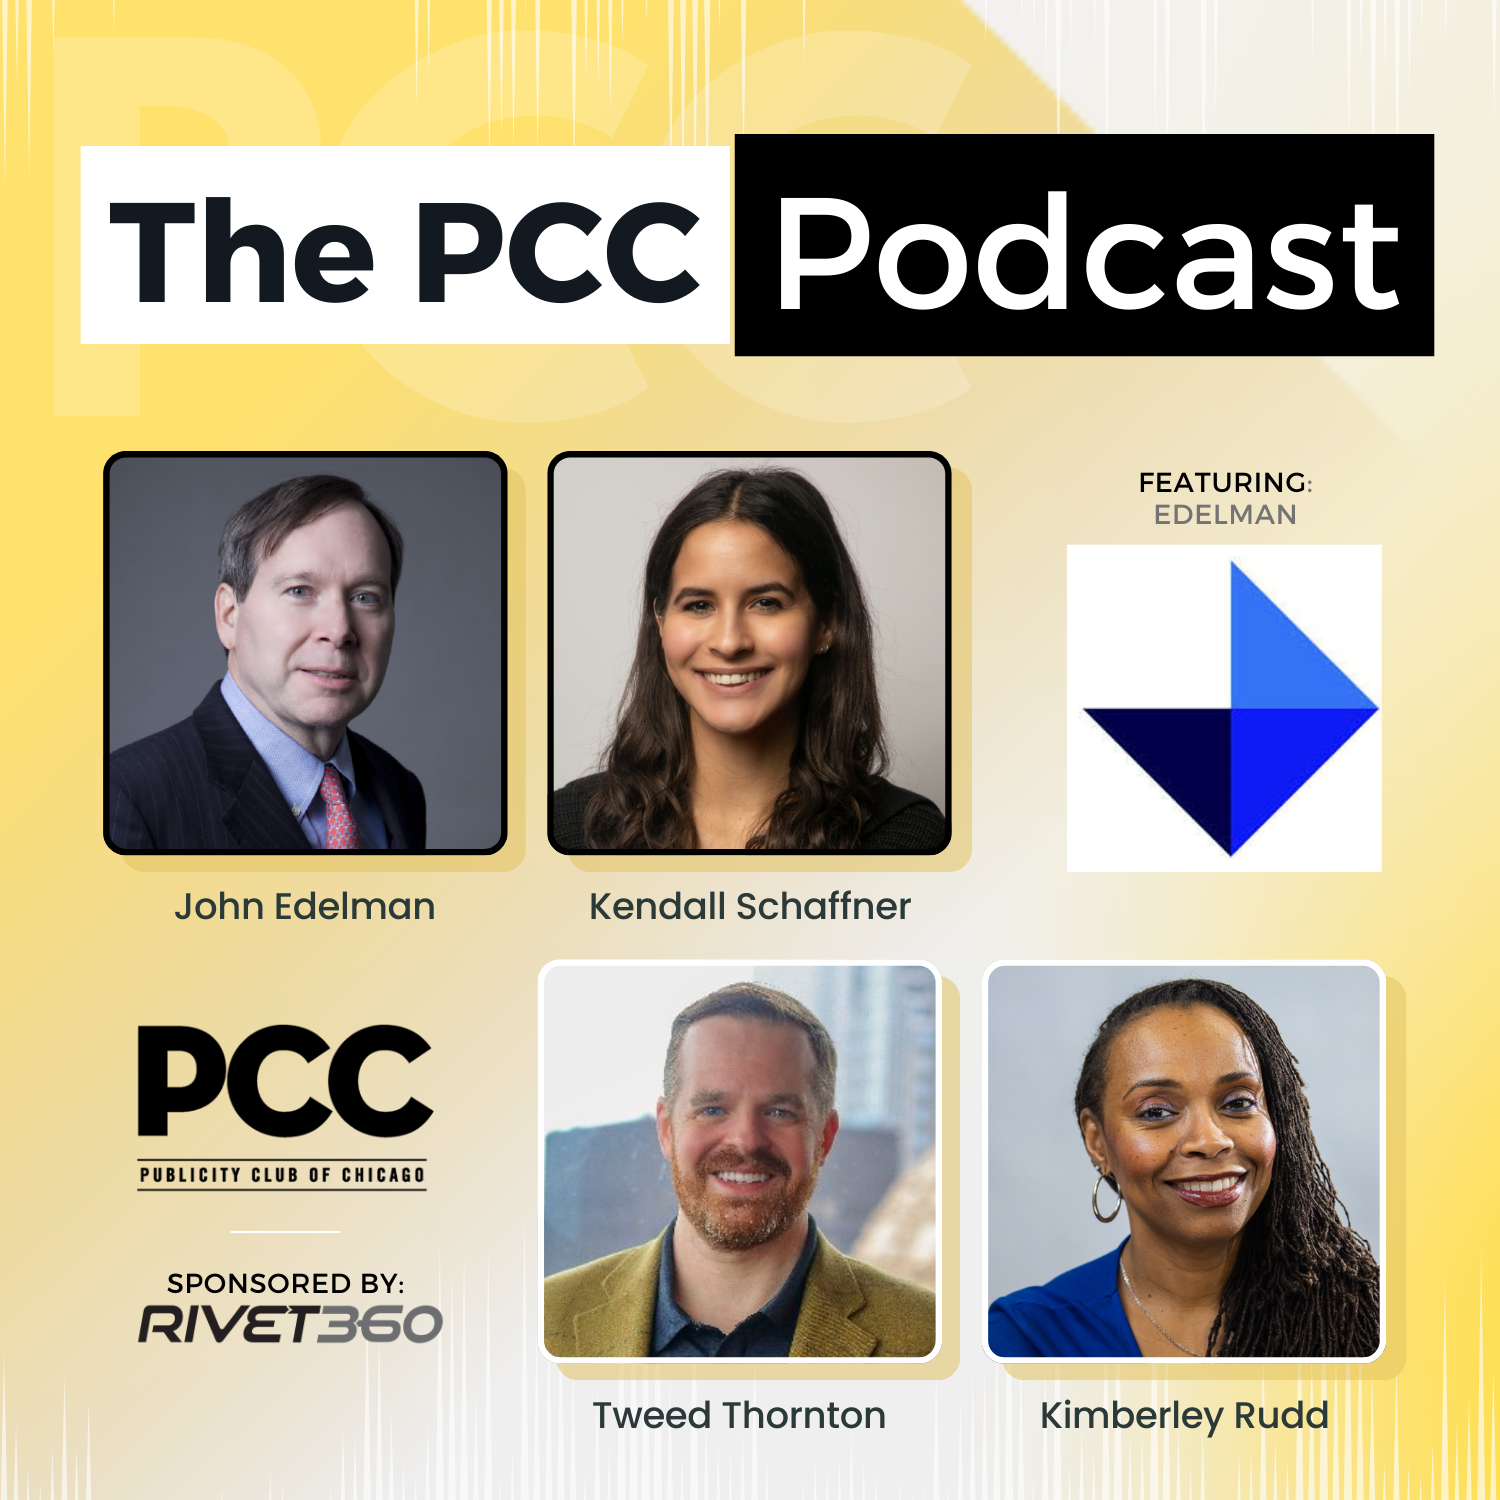 PCC Podcast: The Edelman Episode